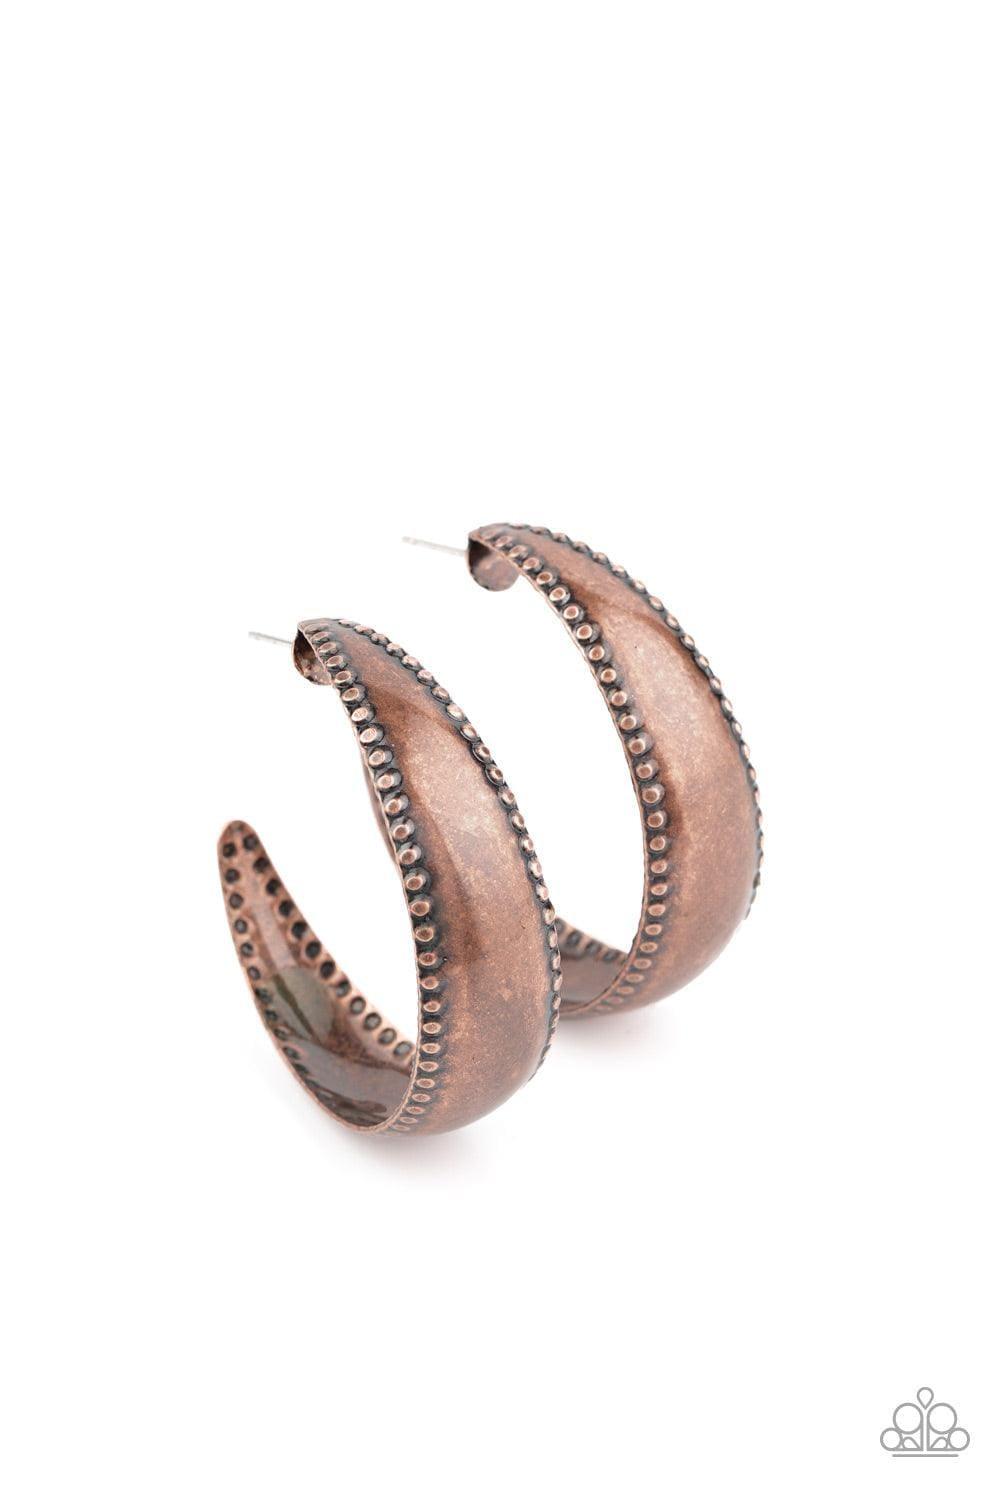 Paparazzi Accessories - Burnished Benevolence - Copper Hoop Earrings - Bling by JessieK